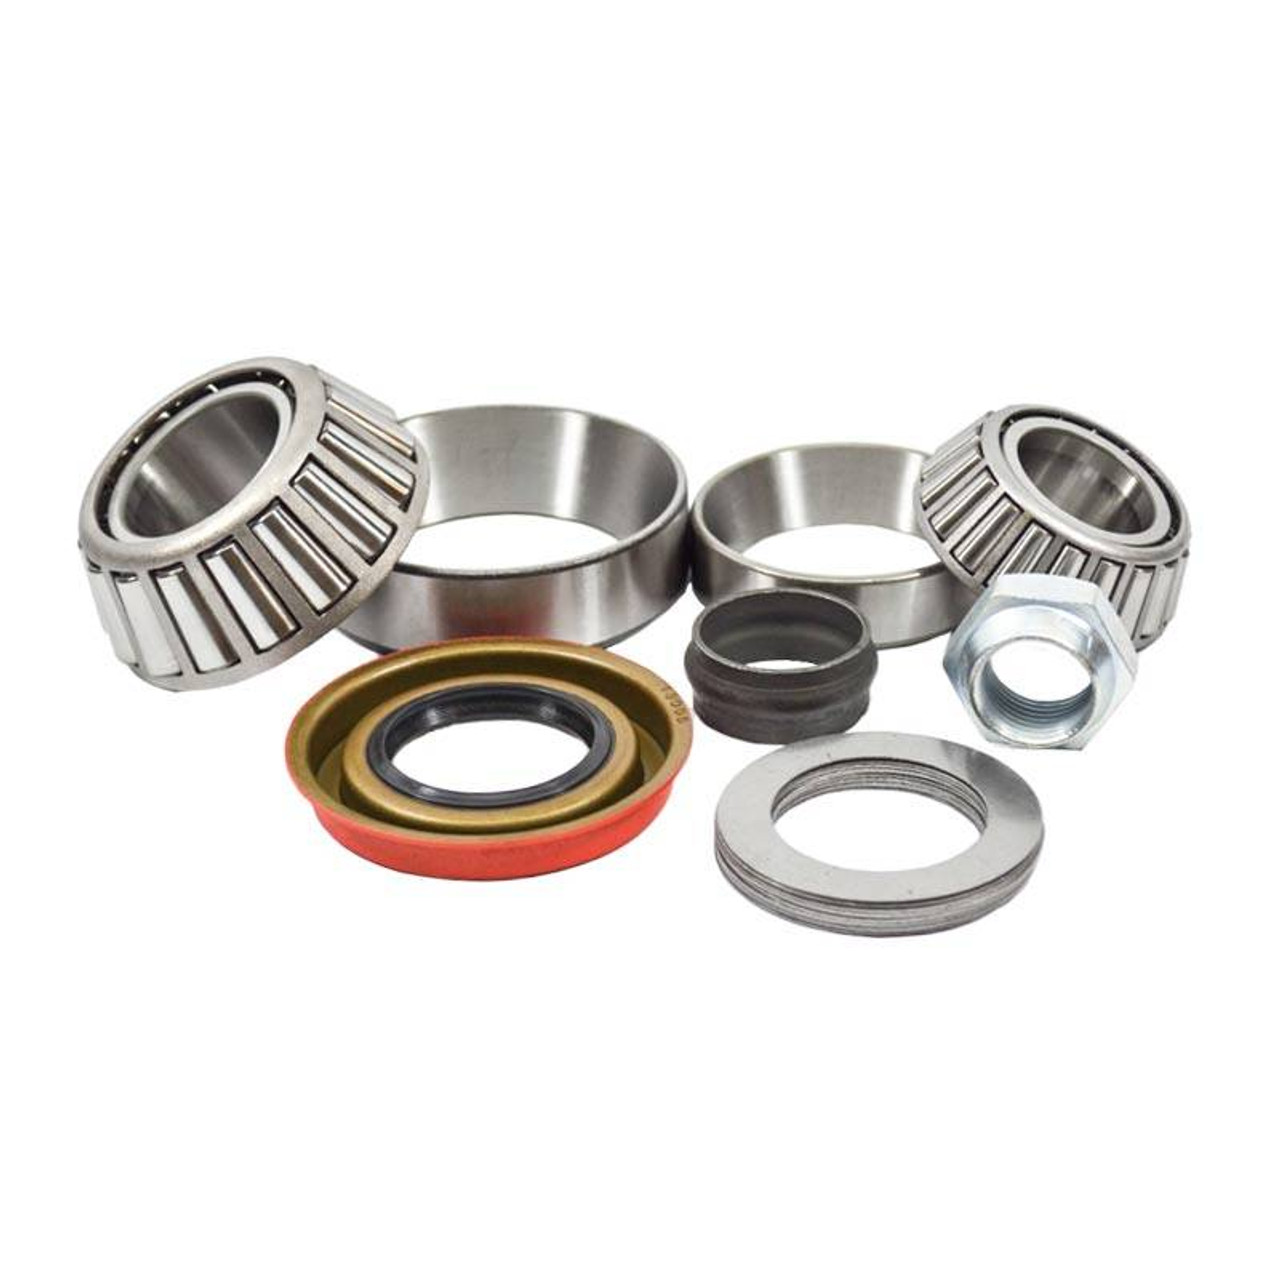 USA Standard Gear ZGK2040 Ring and Pinion Installation Kit | eBay